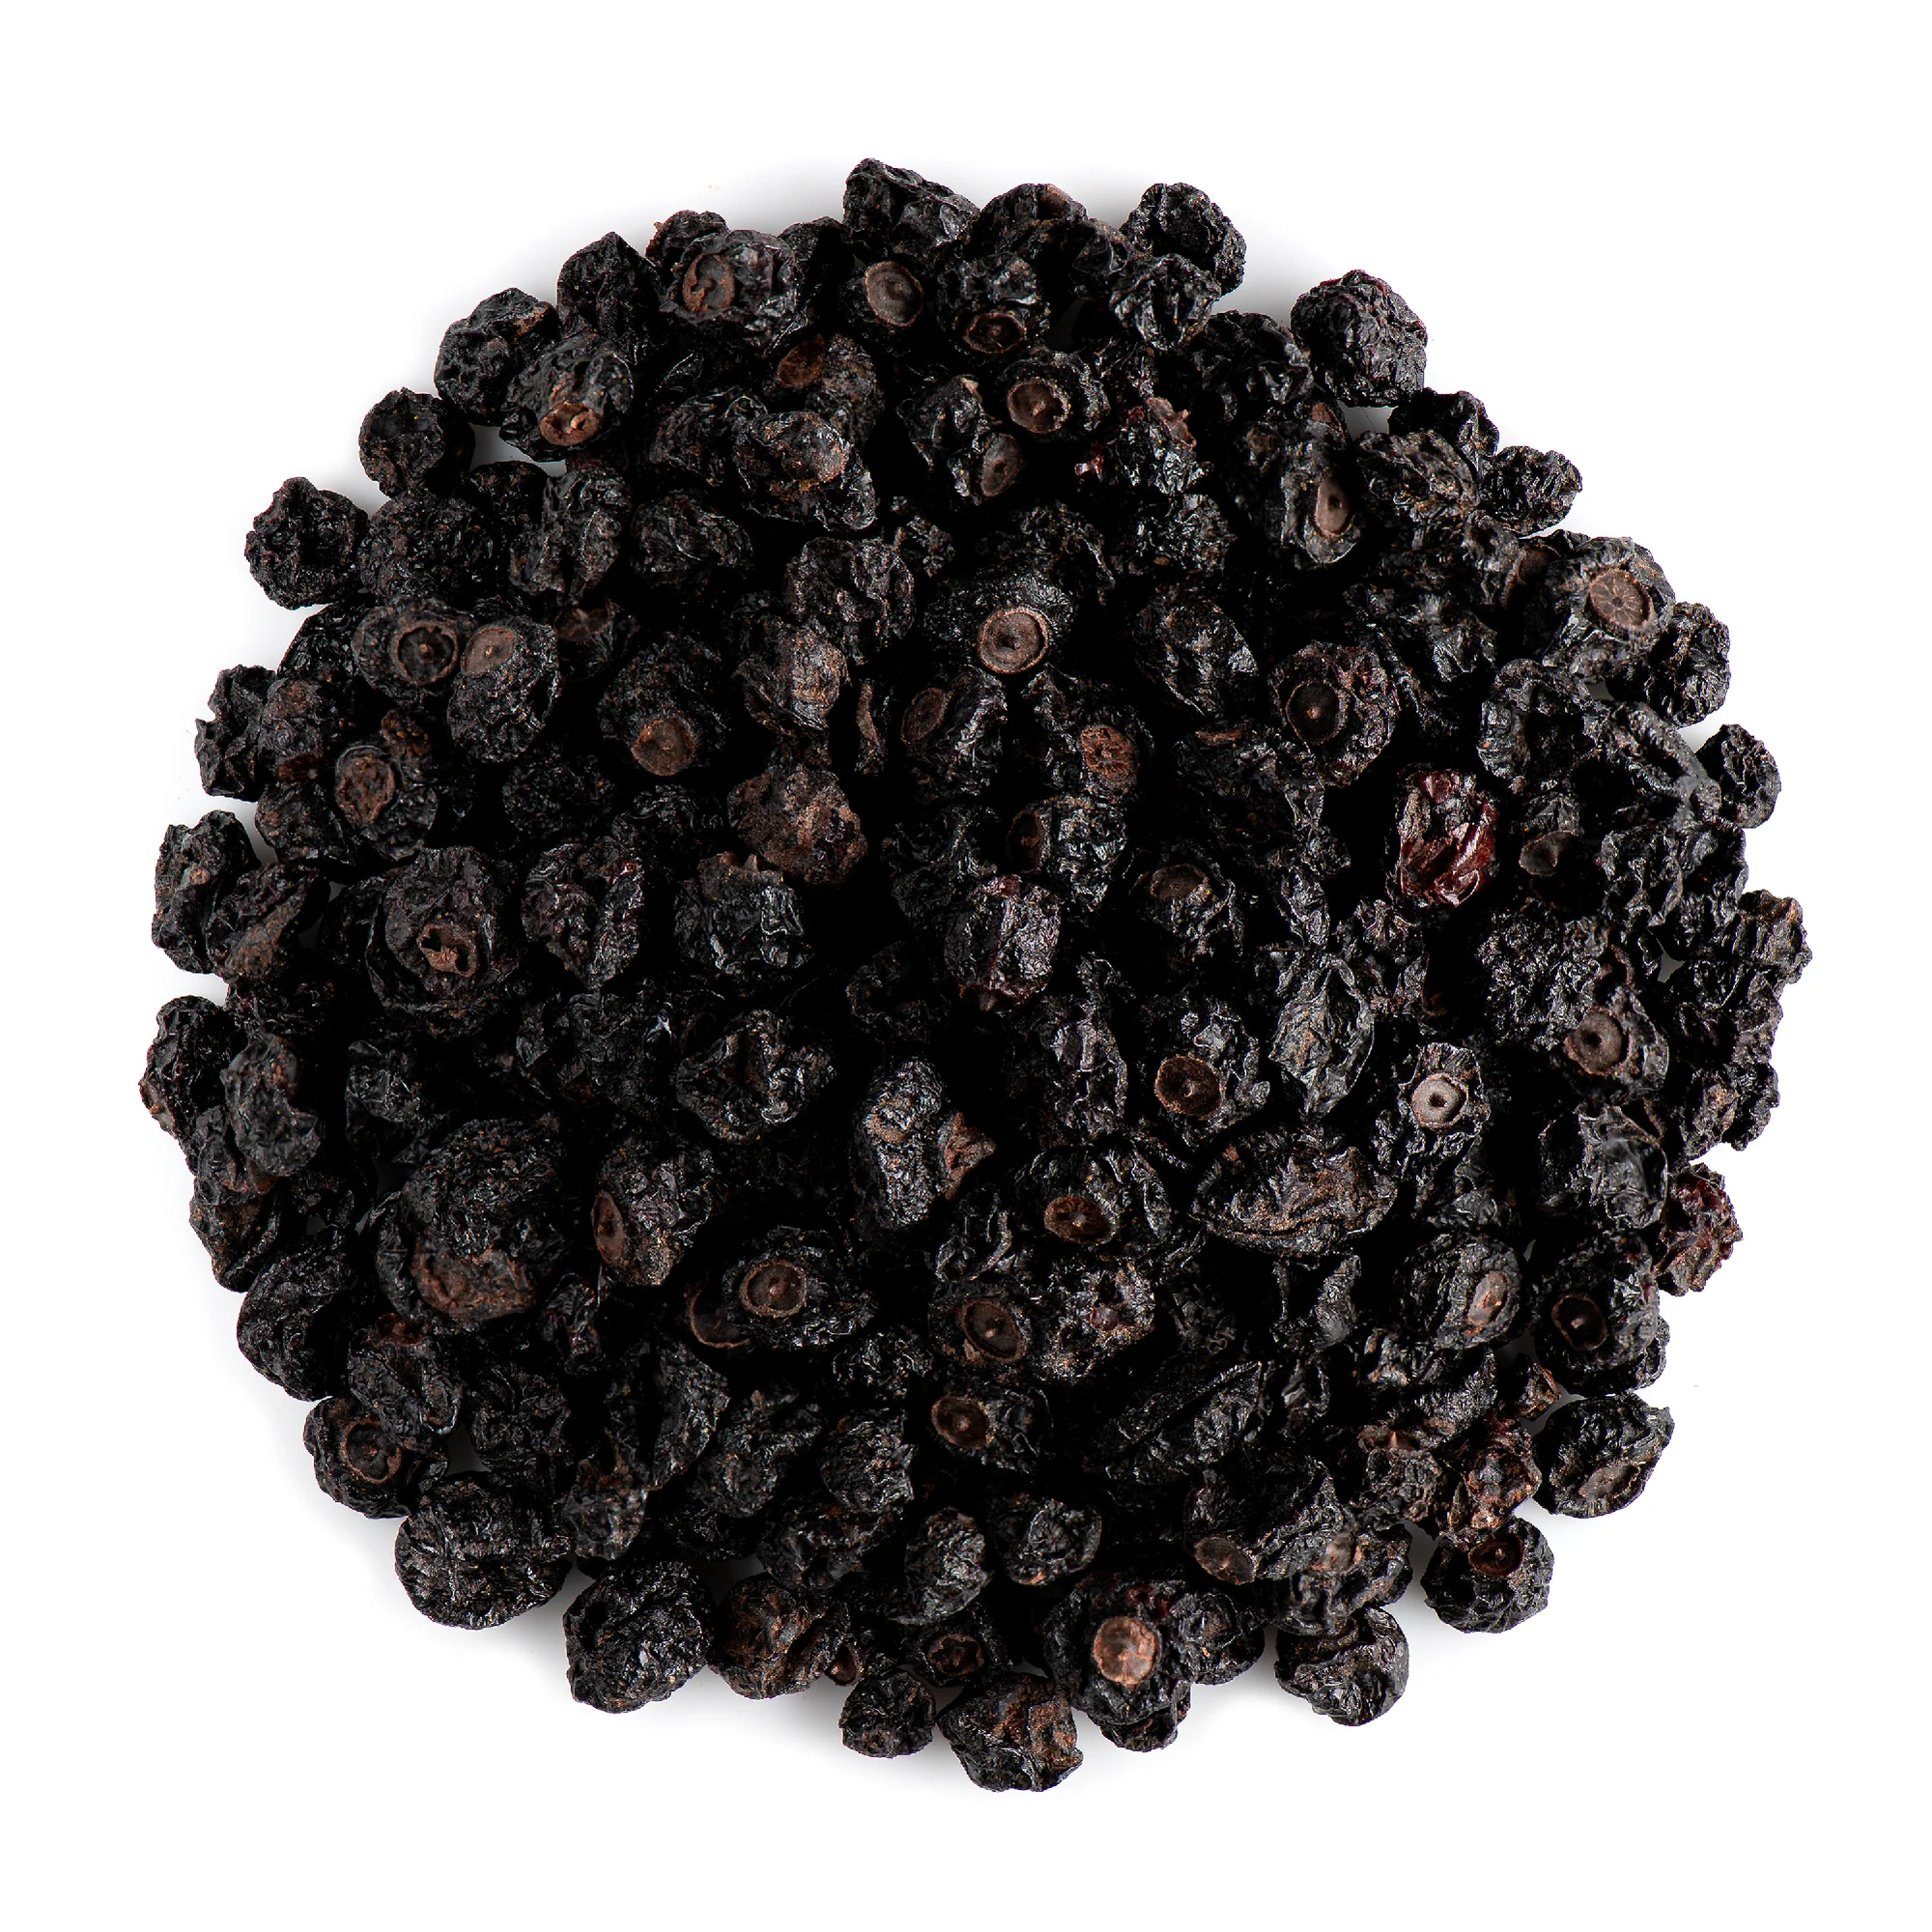 Blackcurrant fruits